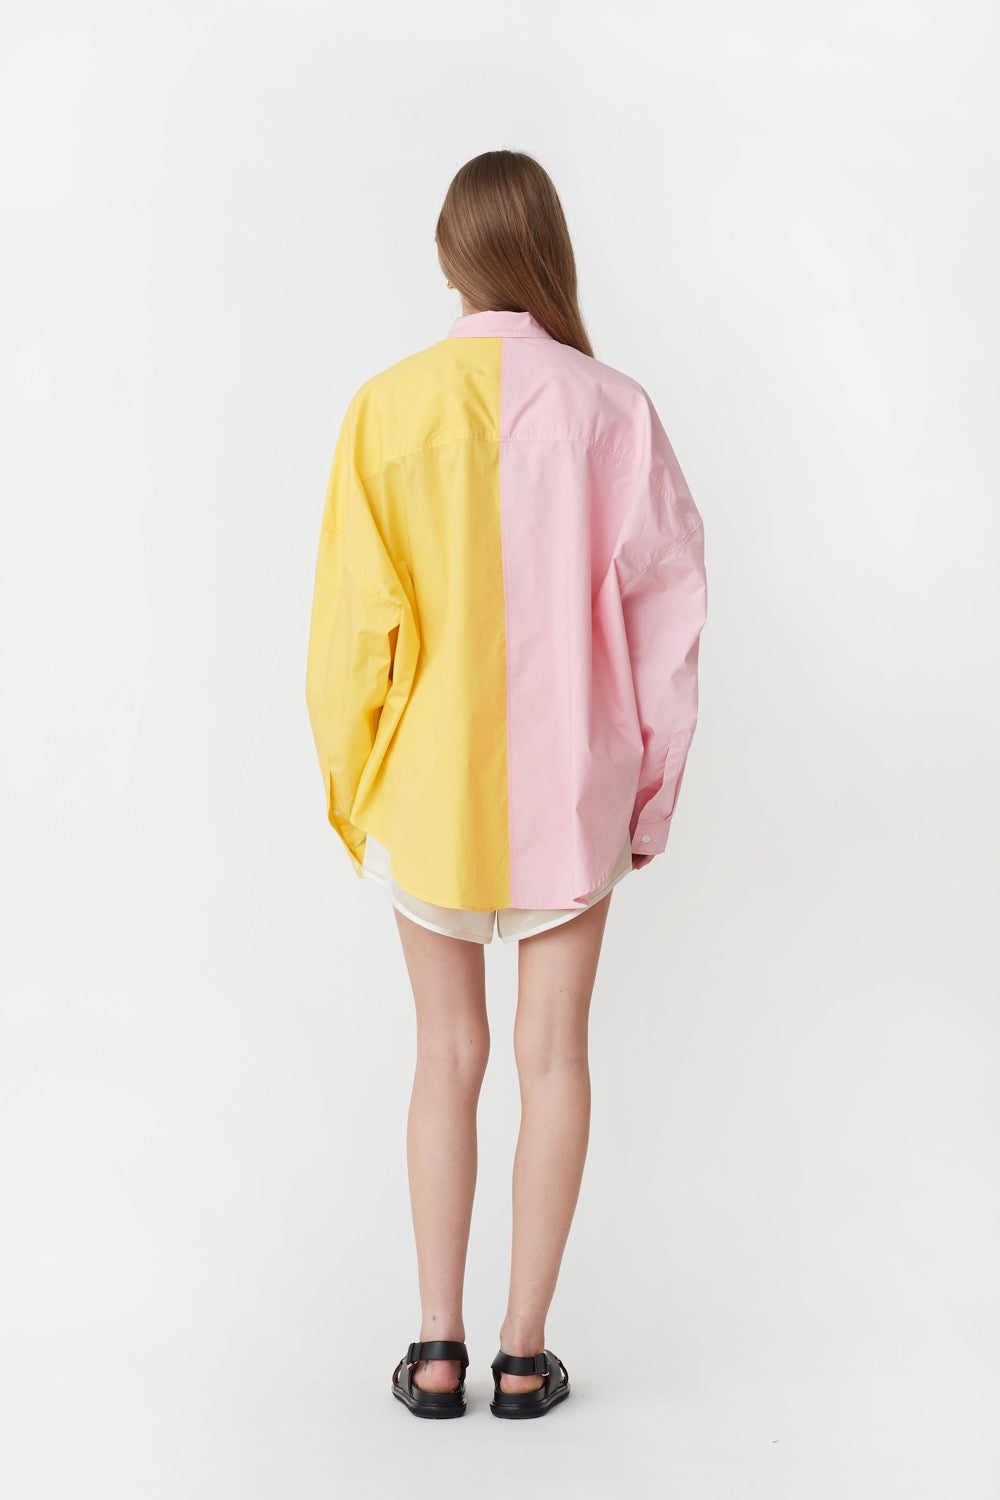 Henrietta Shirt in Yellow/Pink - BLANCA